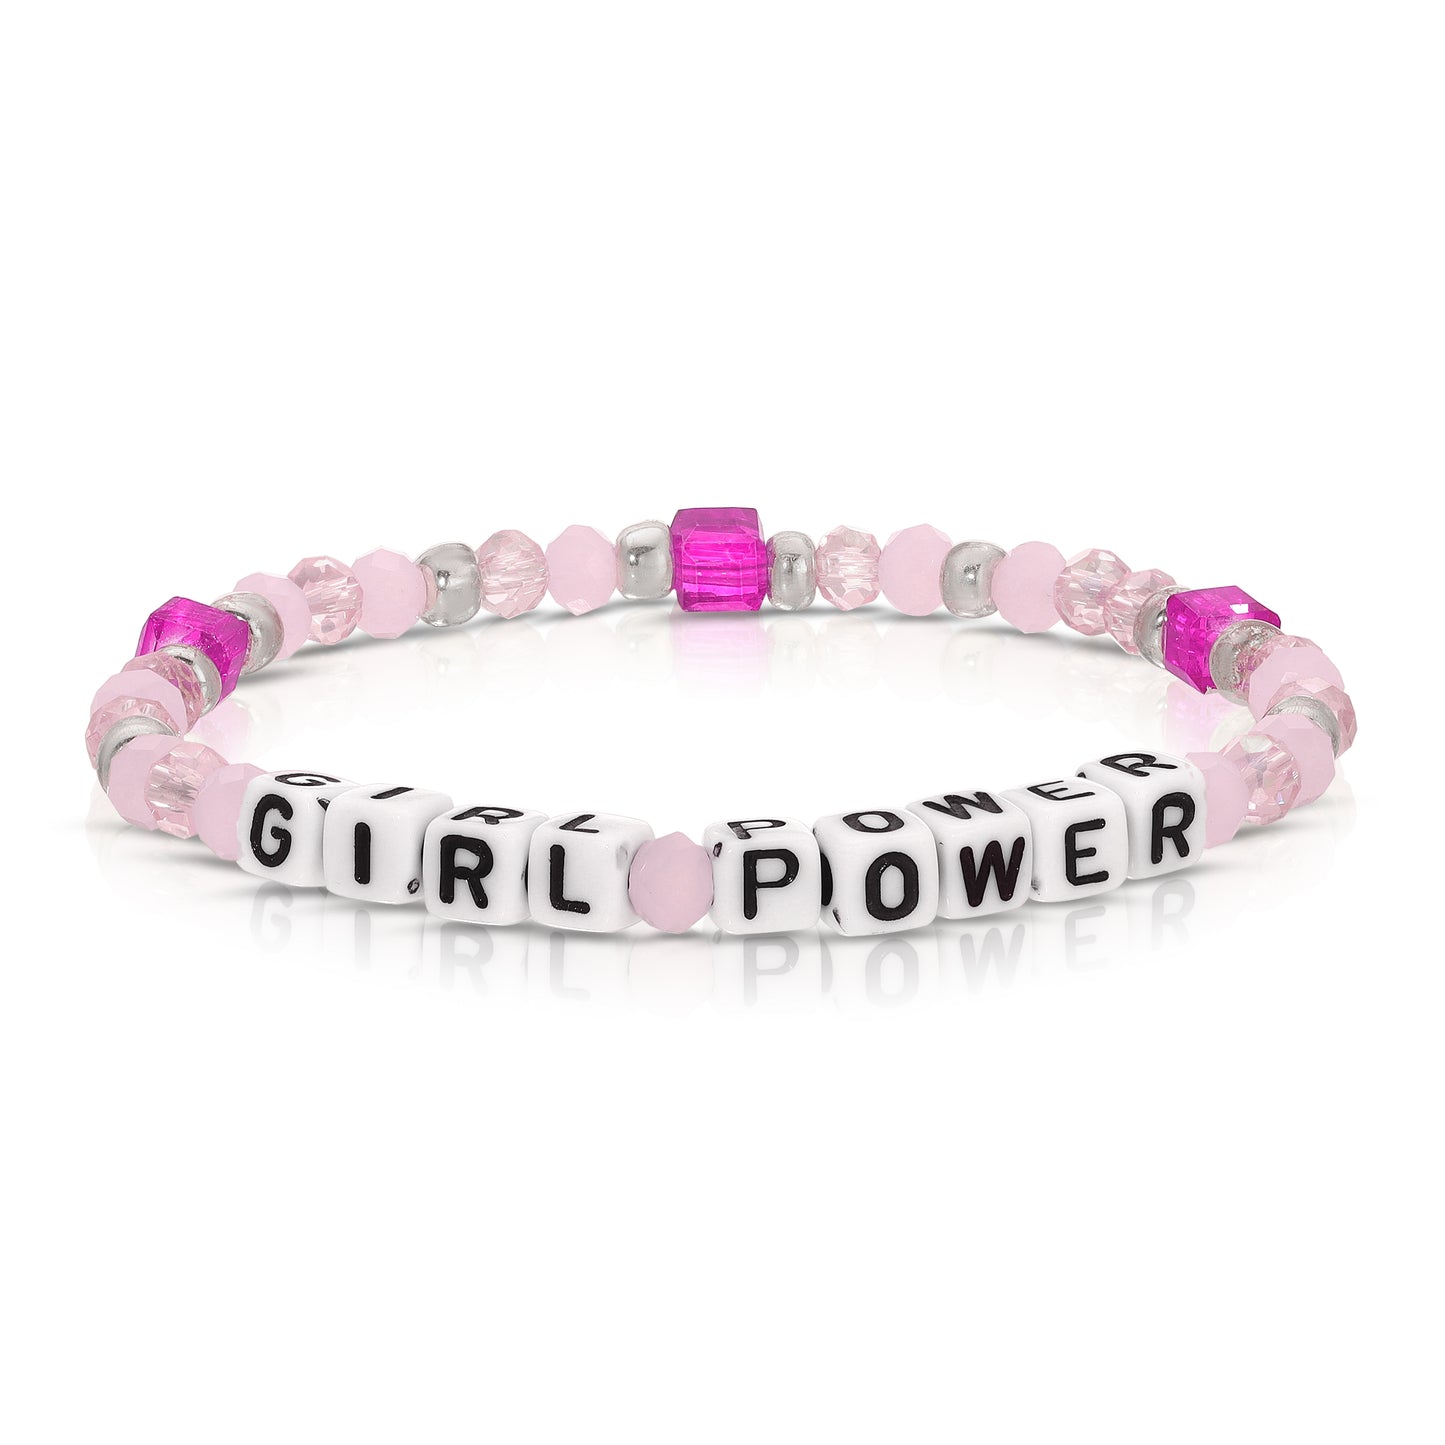 GIRL POWER Kids Colorful Words Bracelets